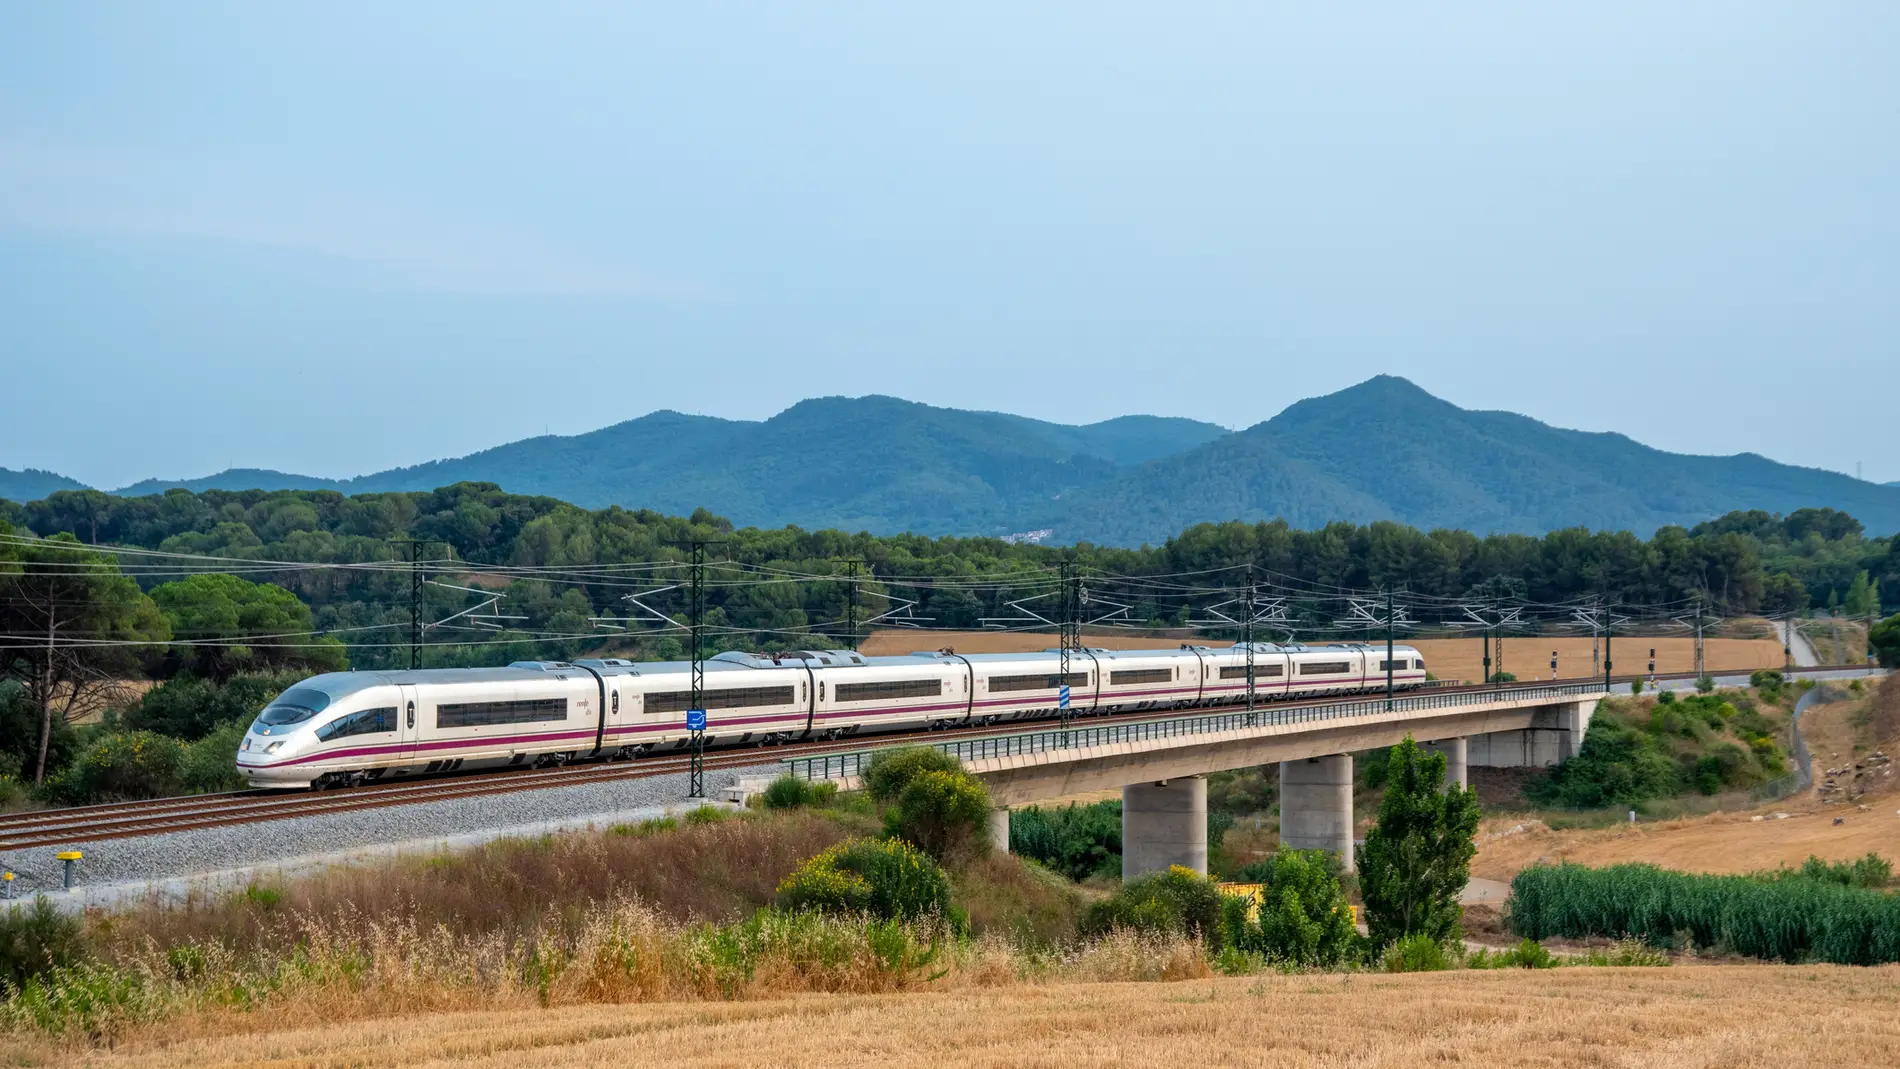 Tren de alta velocidad (AVE) en España